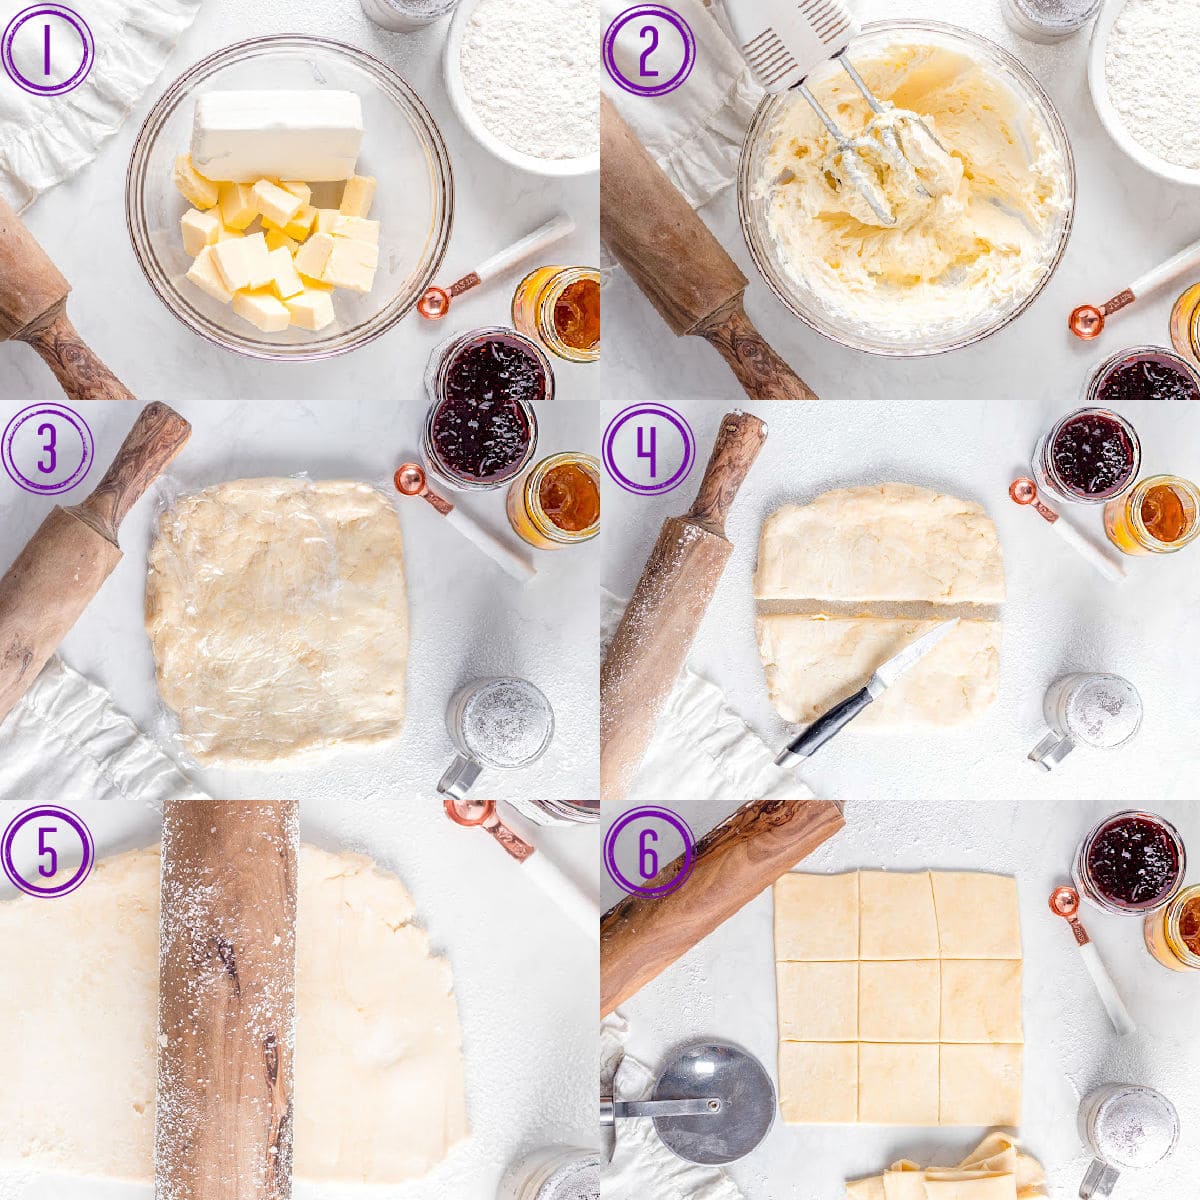 six image collage showing how to make polish christmas cookies dough.